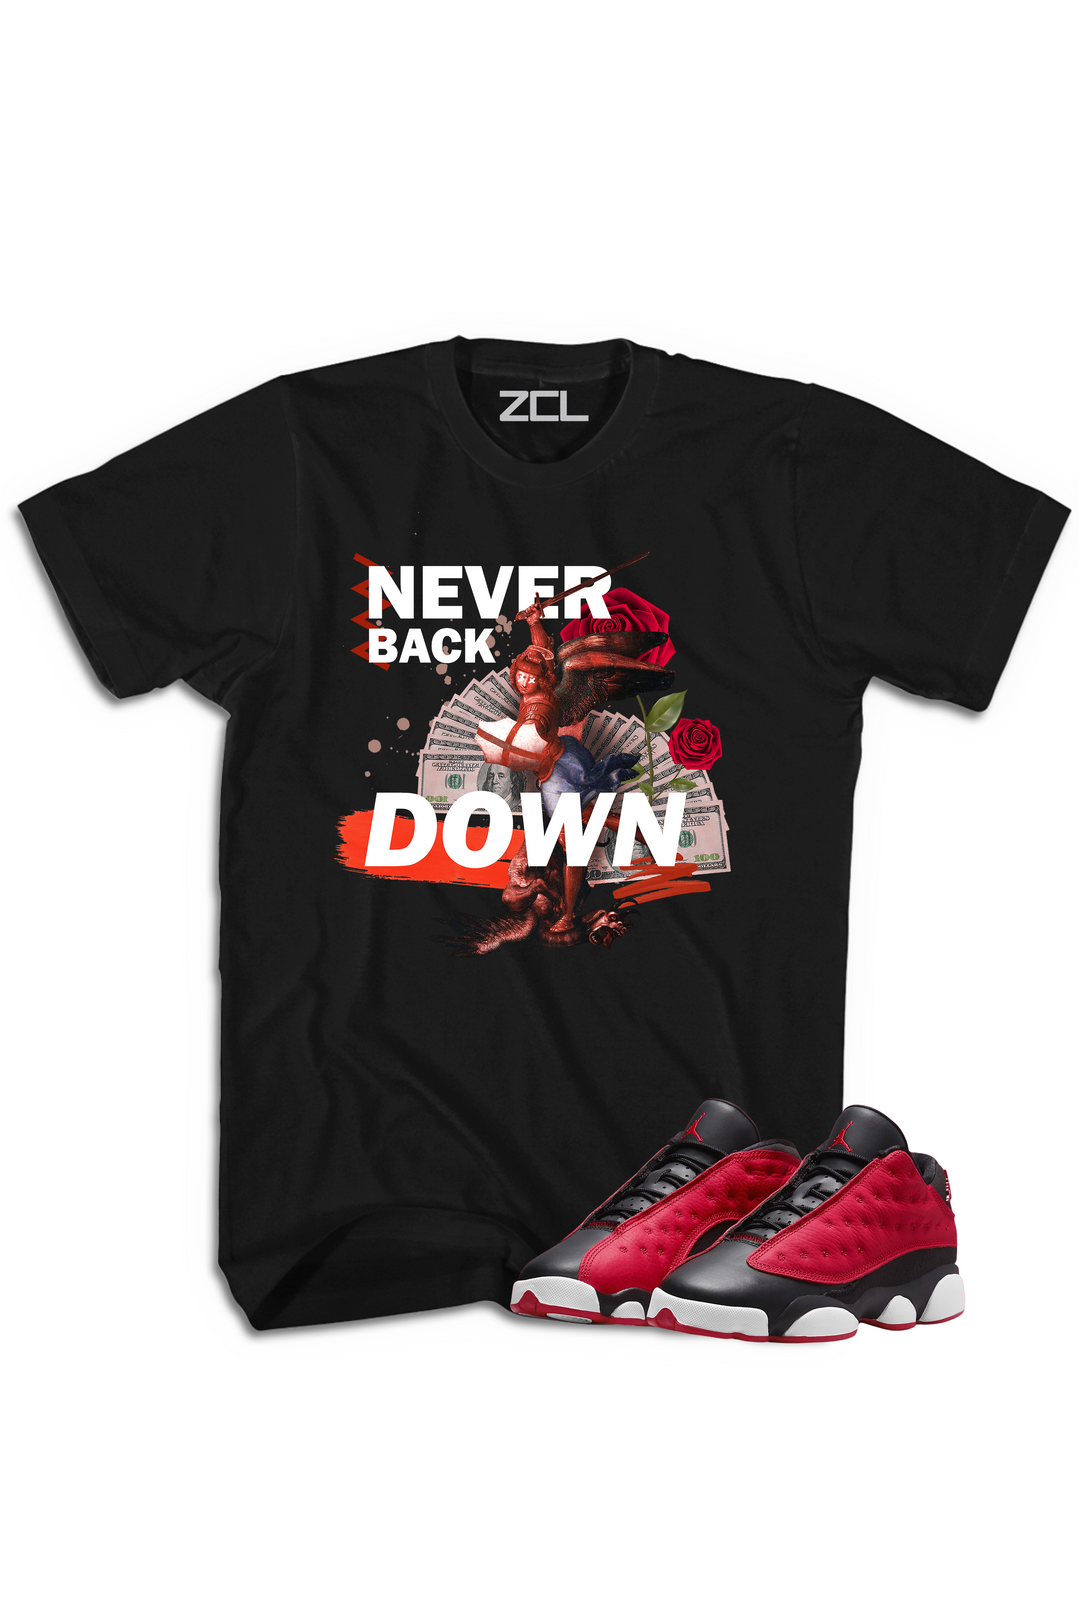 Air Jordan 13 Low "Never Back Down" Tee Very Berry - Zamage